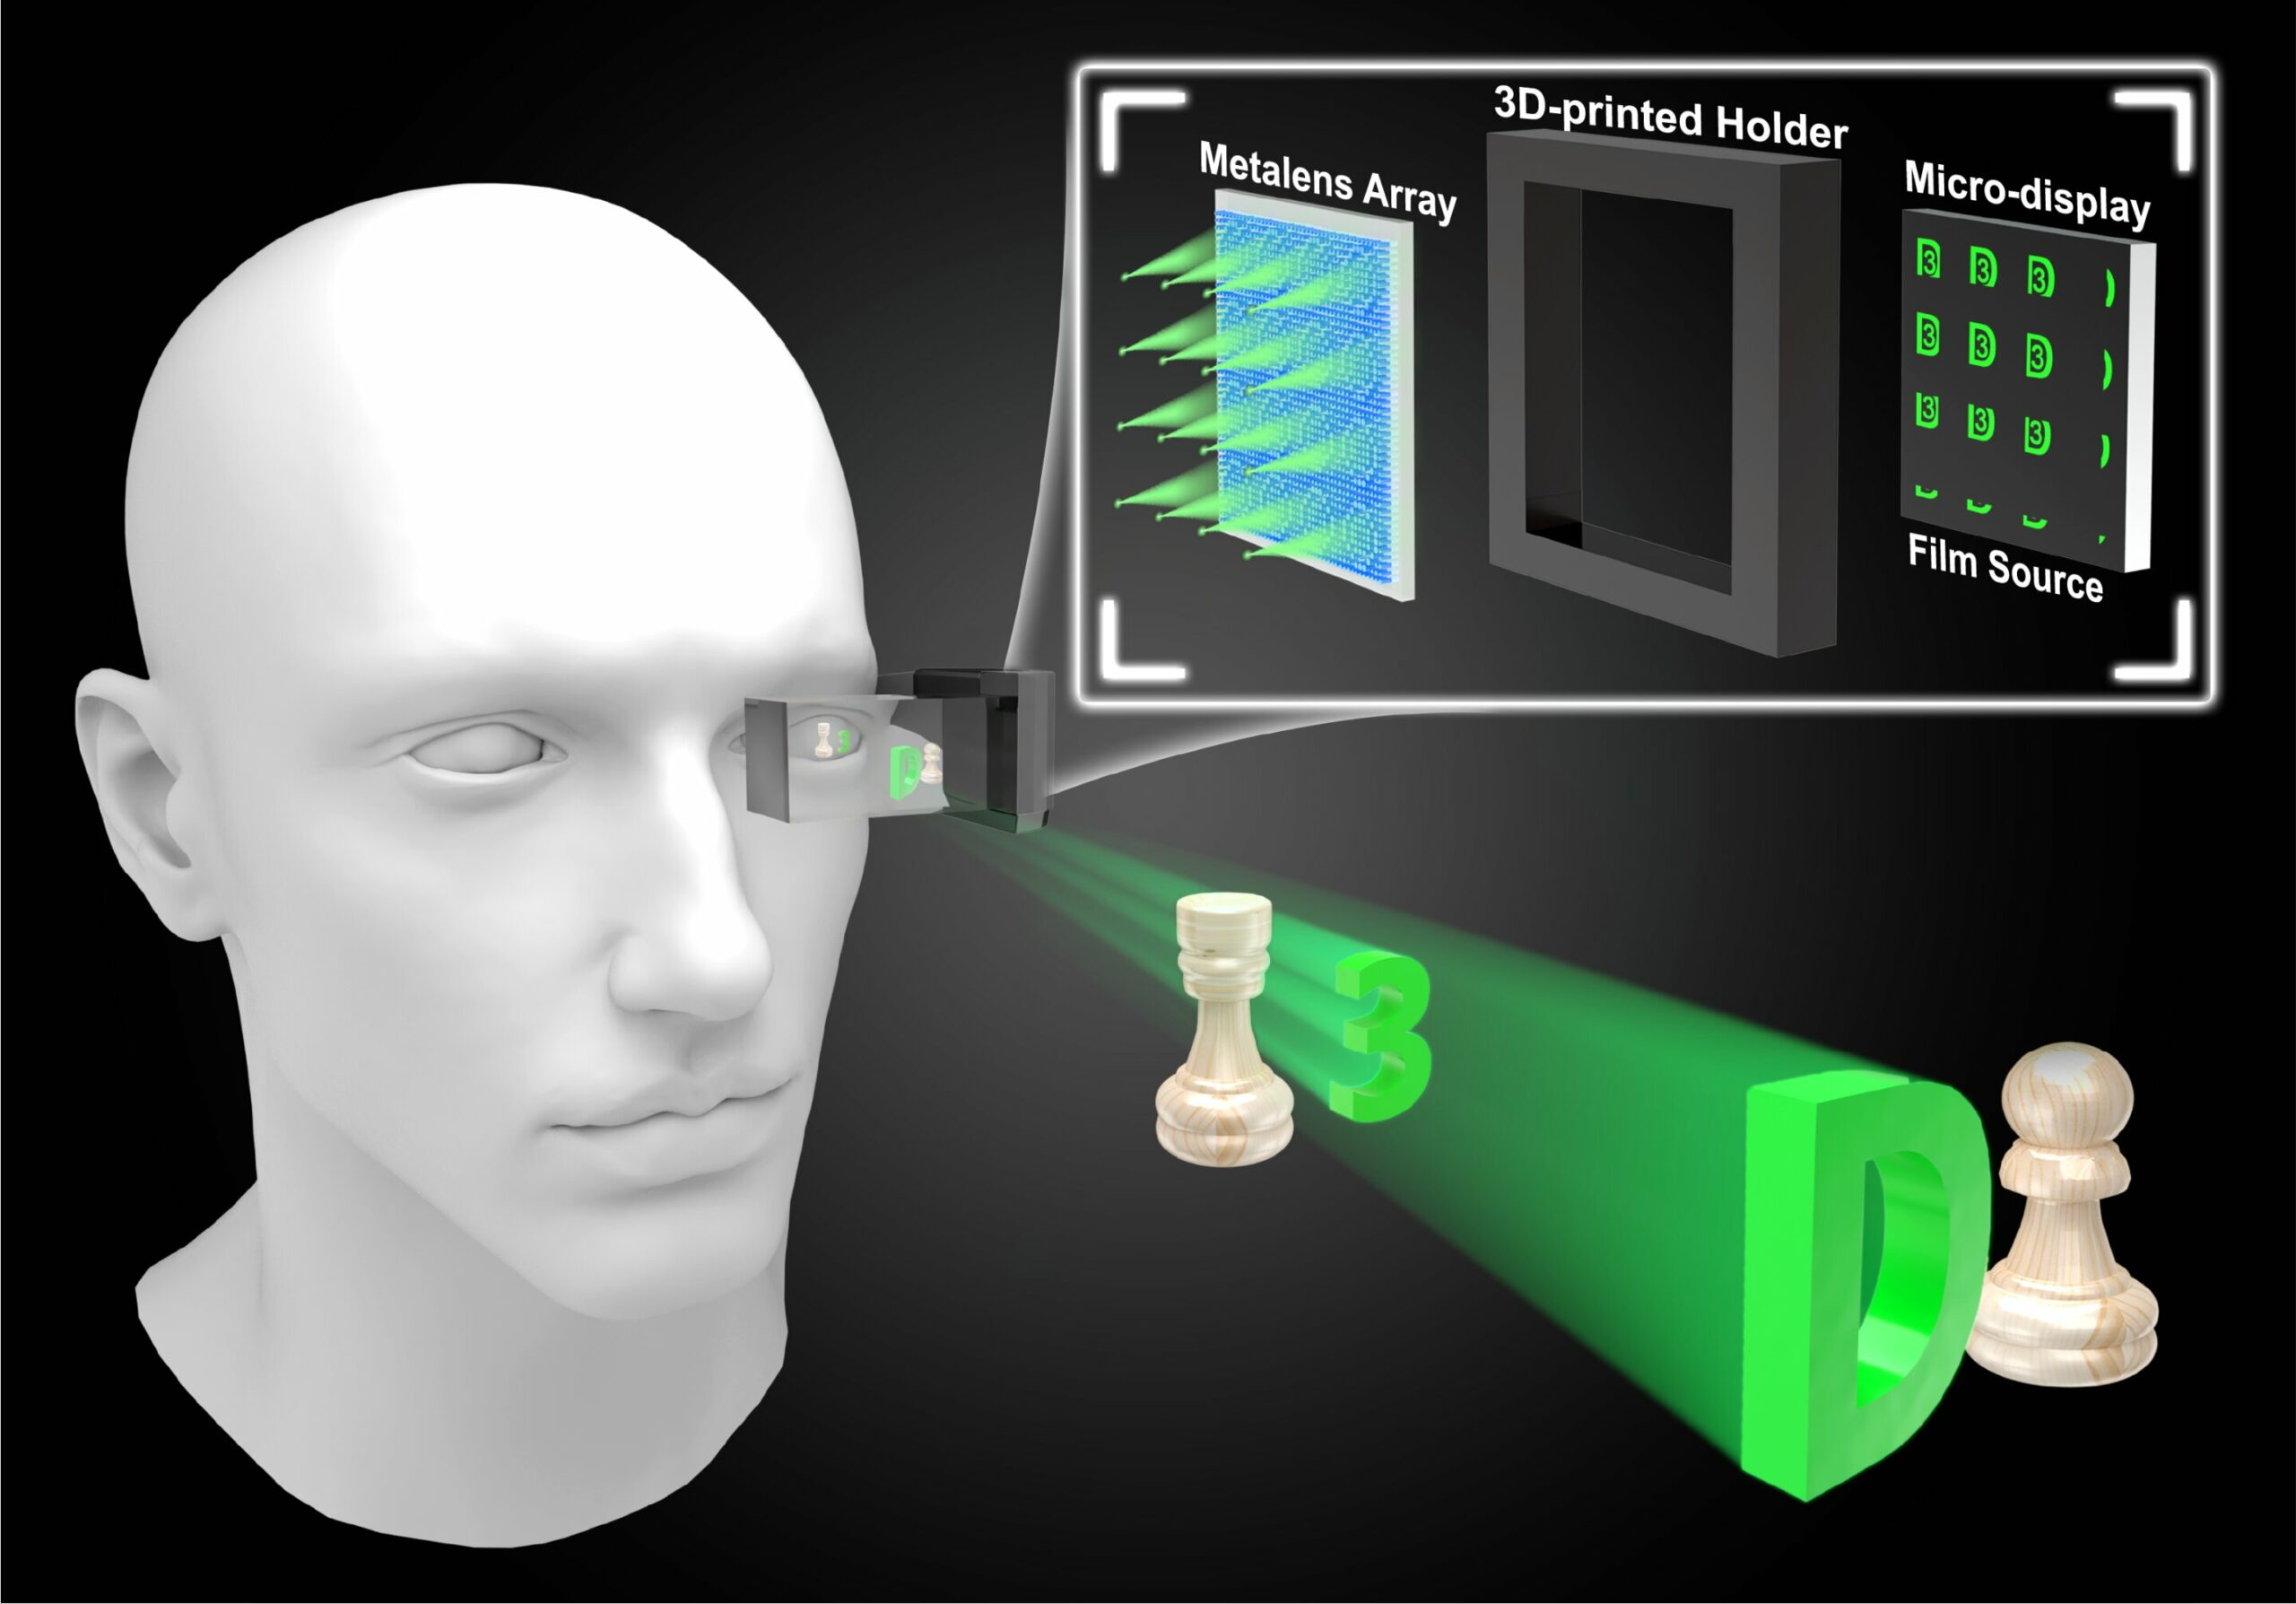 Metalens Array Empowers the Next Era of Genuine 3D Near-Eye Displays